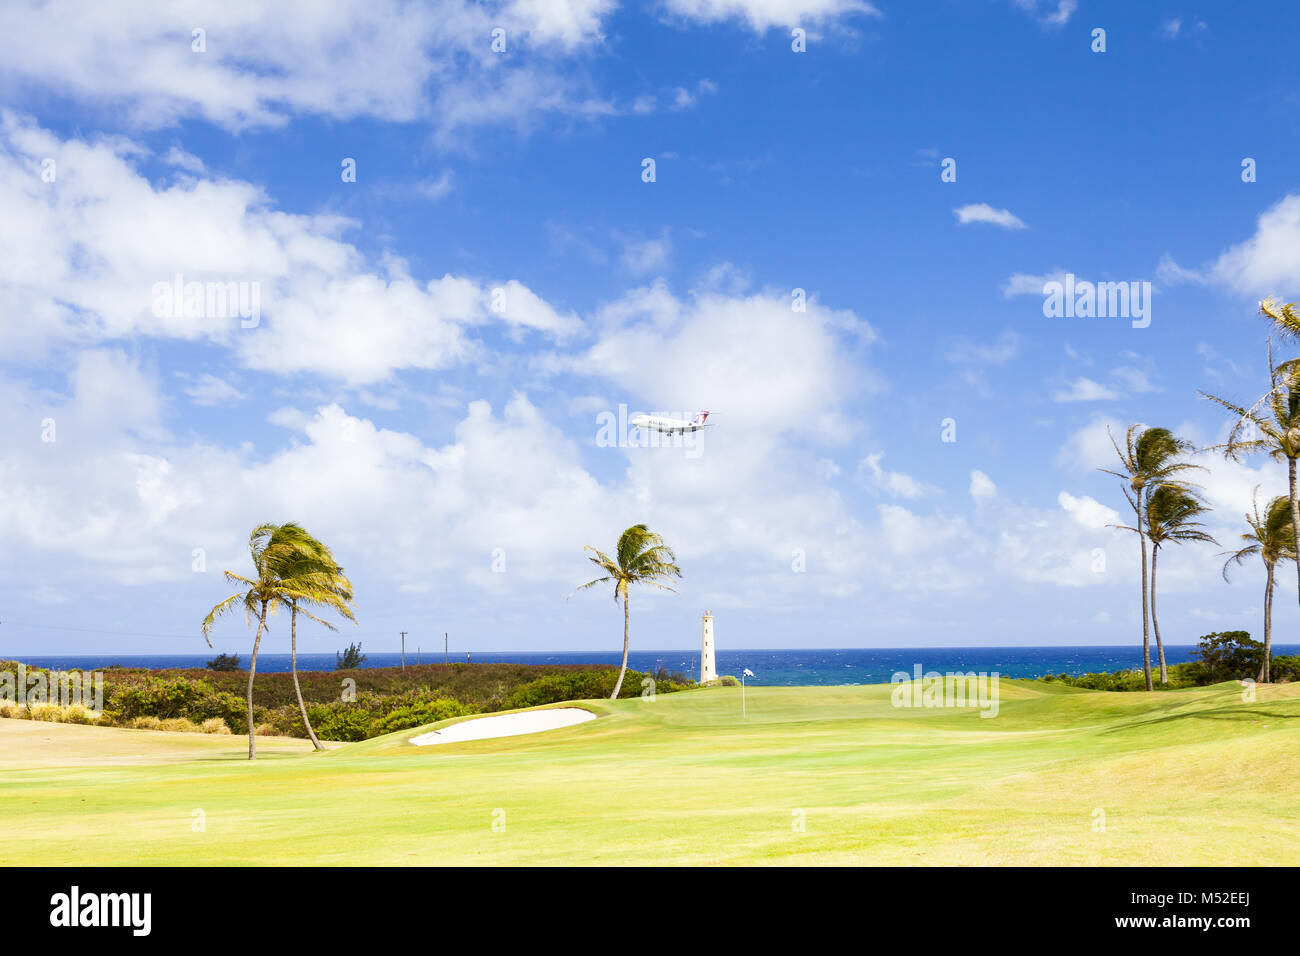 a plane landing in hawaii kawaii Stock Photo